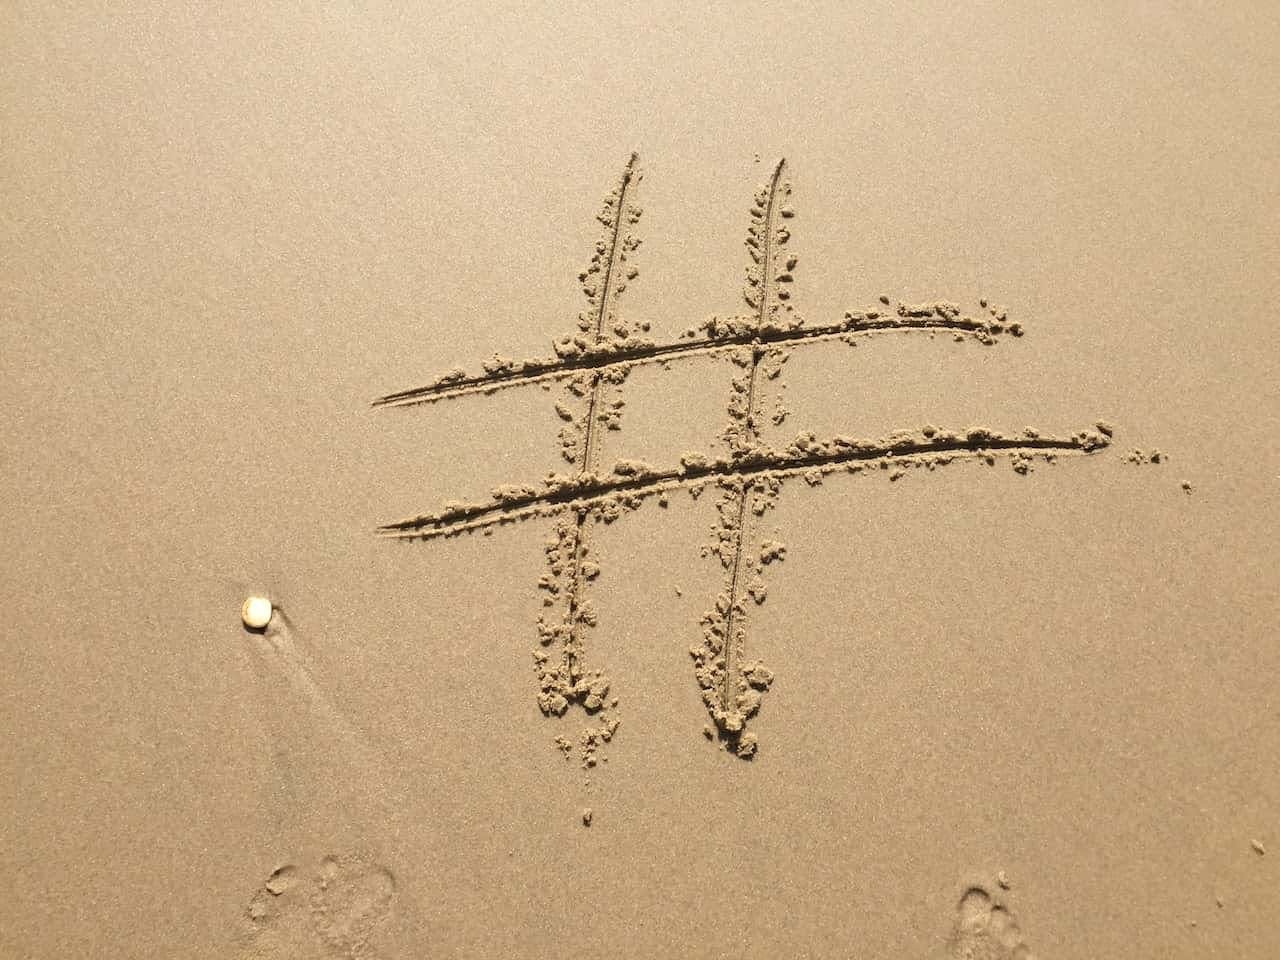 Hashtag sign on sand 